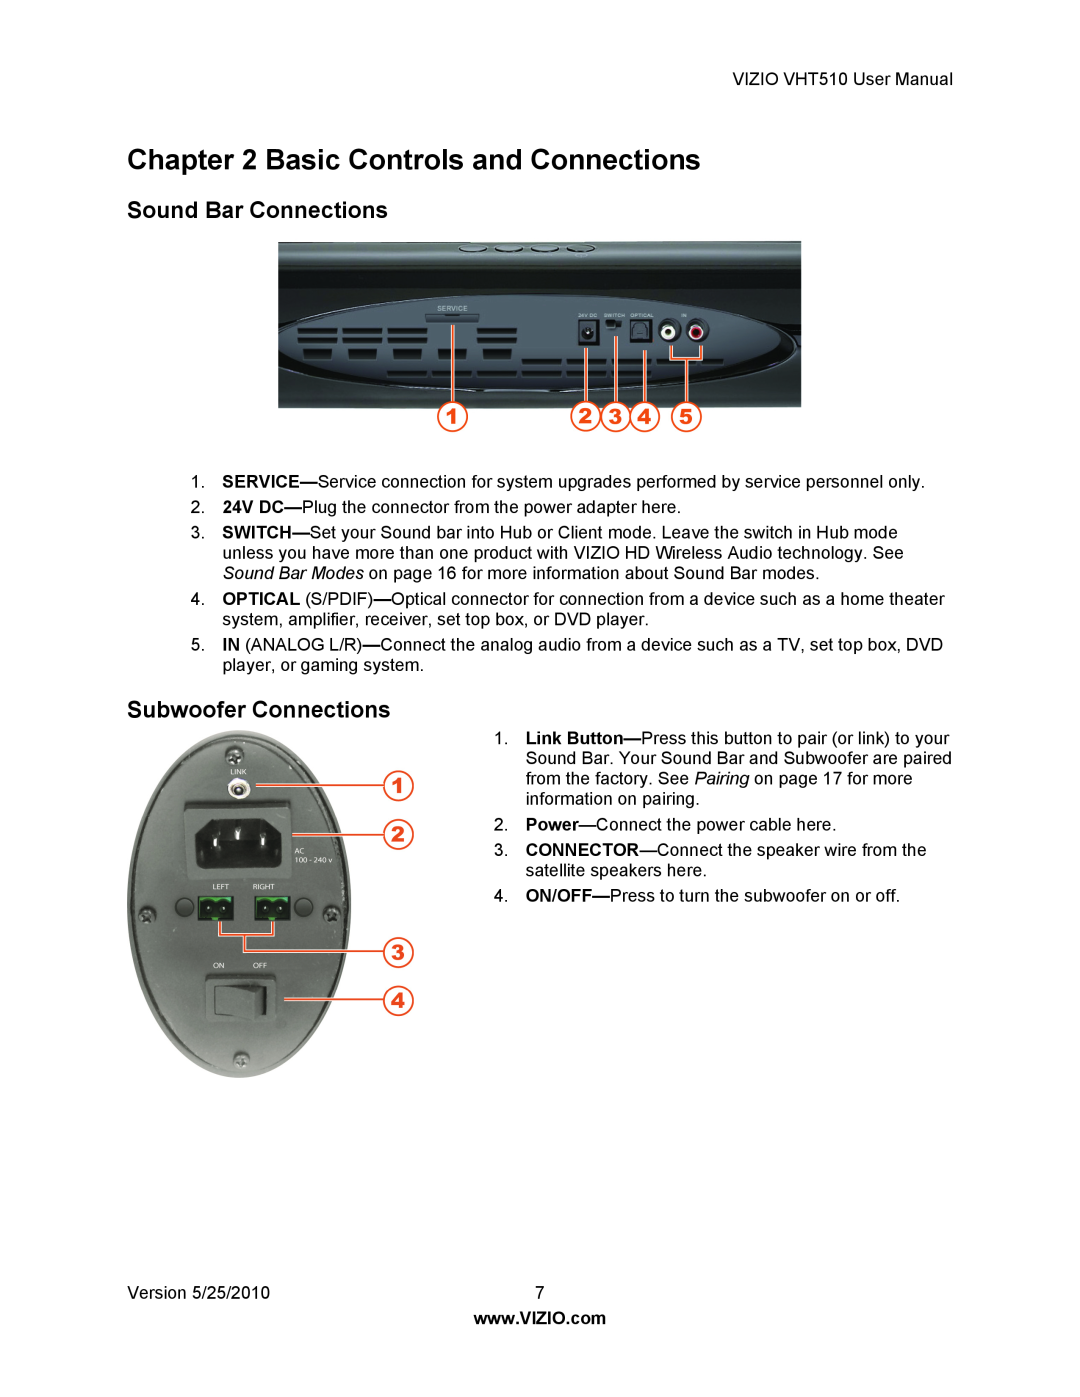 Vizio VHT510 user manual Basic Controls and Connections, Sound Bar Connections, Subwoofer Connections 